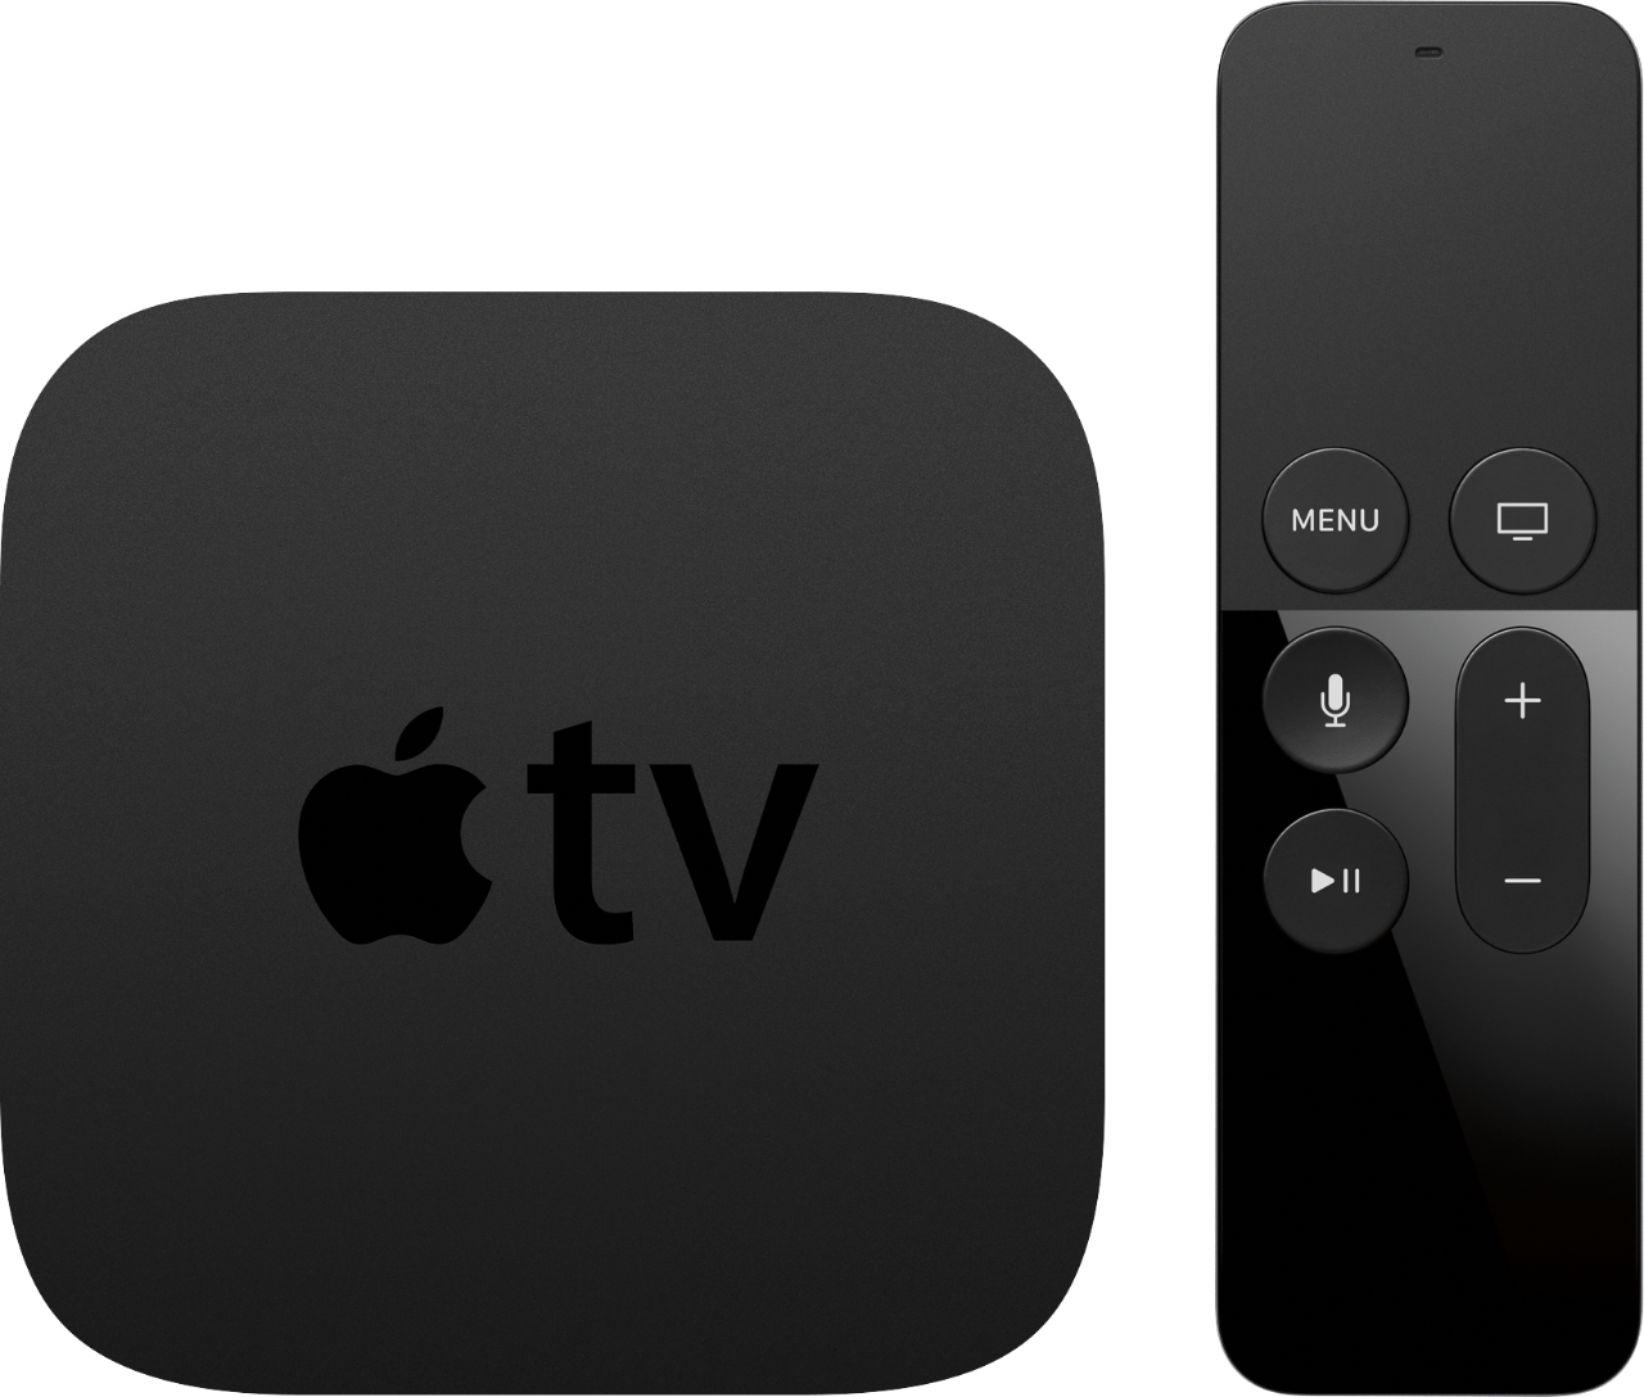 Apple TV – 32GB (4th Generation) Black MGY52LL/A - Best Buy